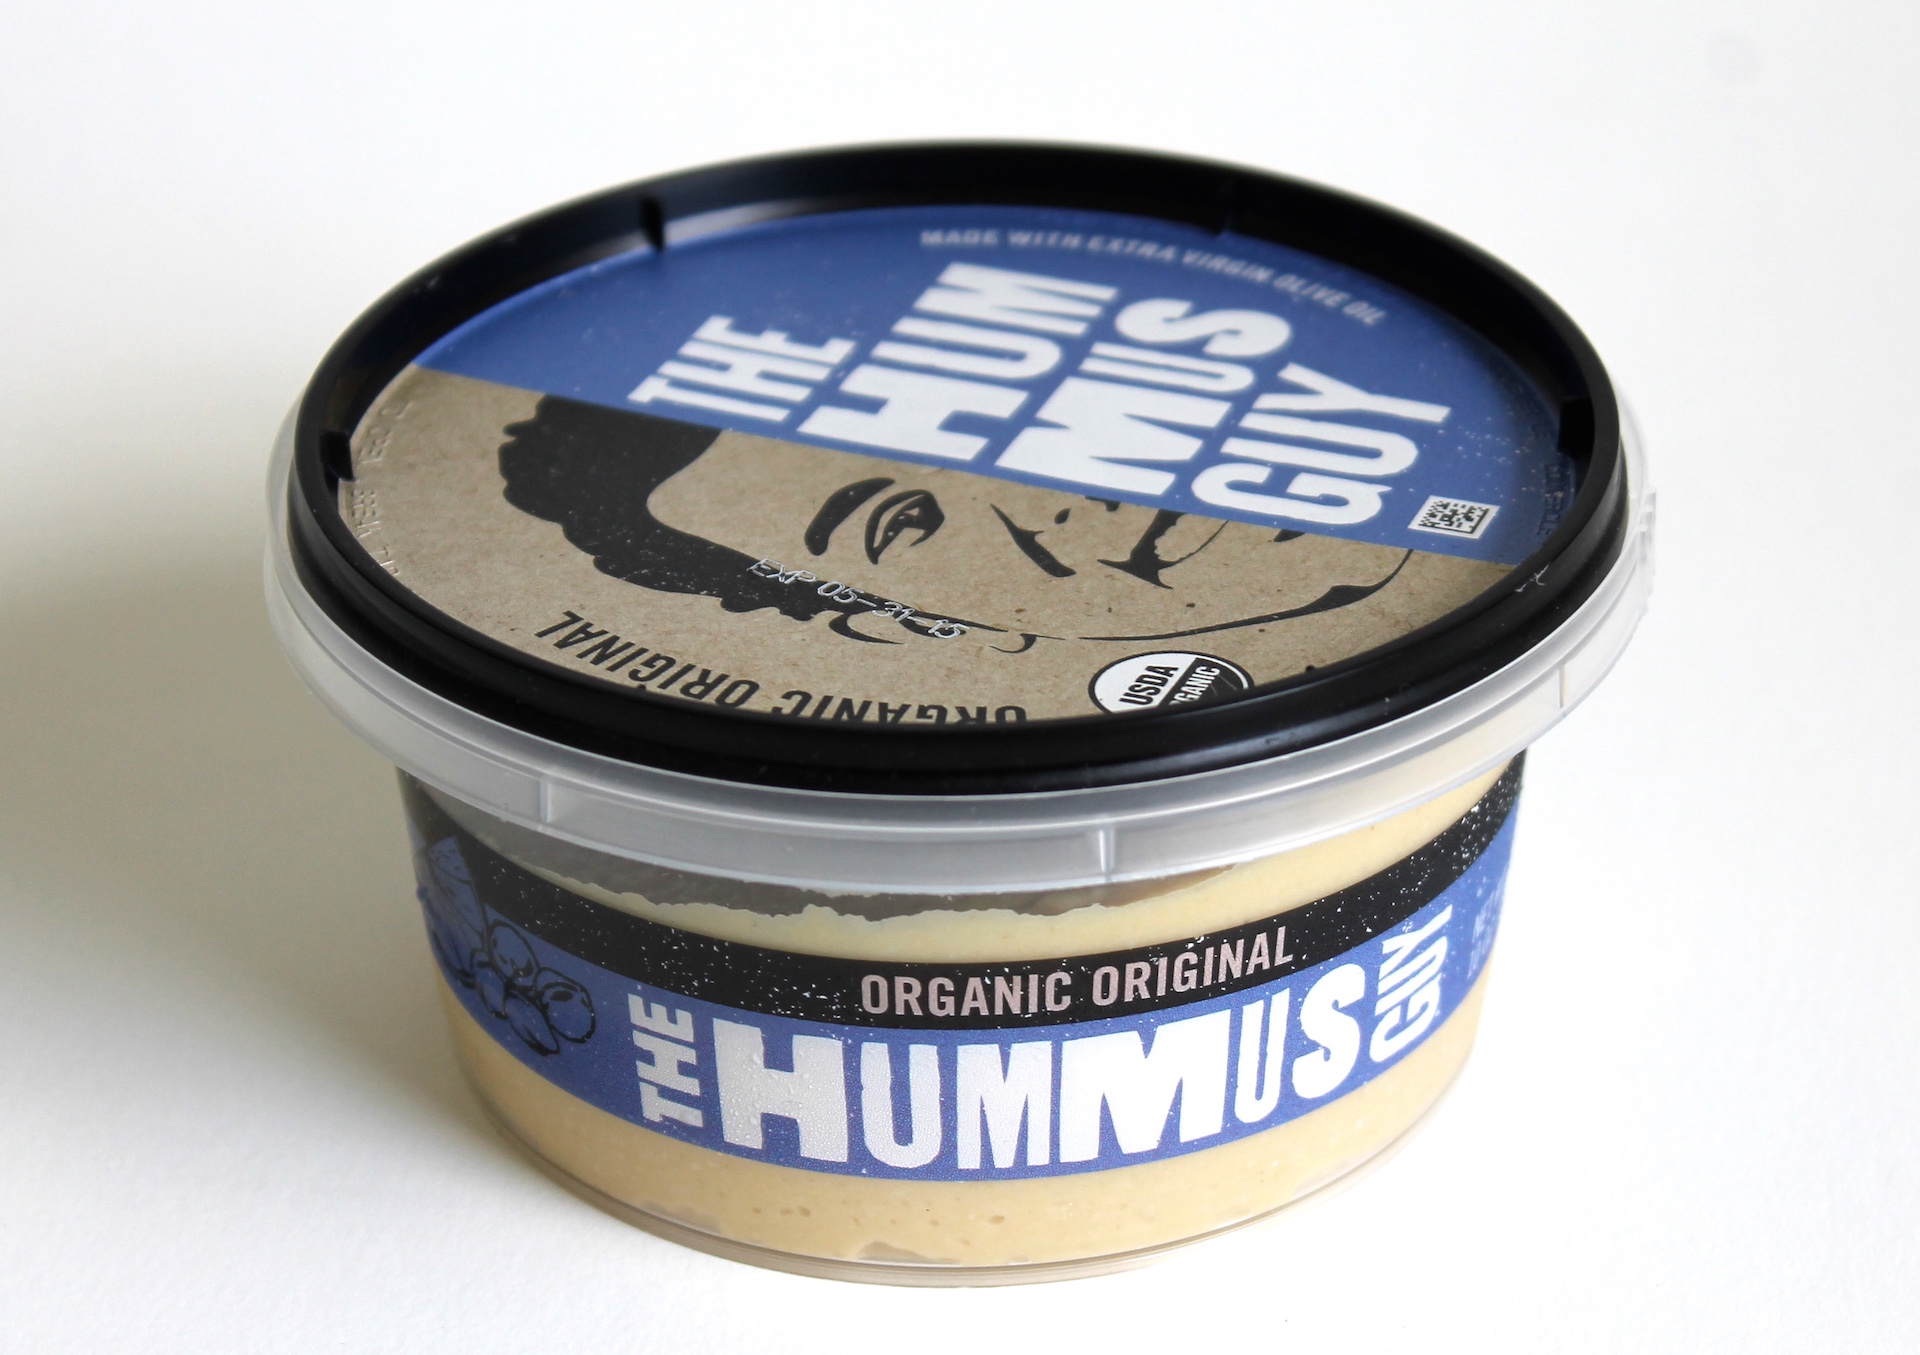 The Hummus Guy Organic Original